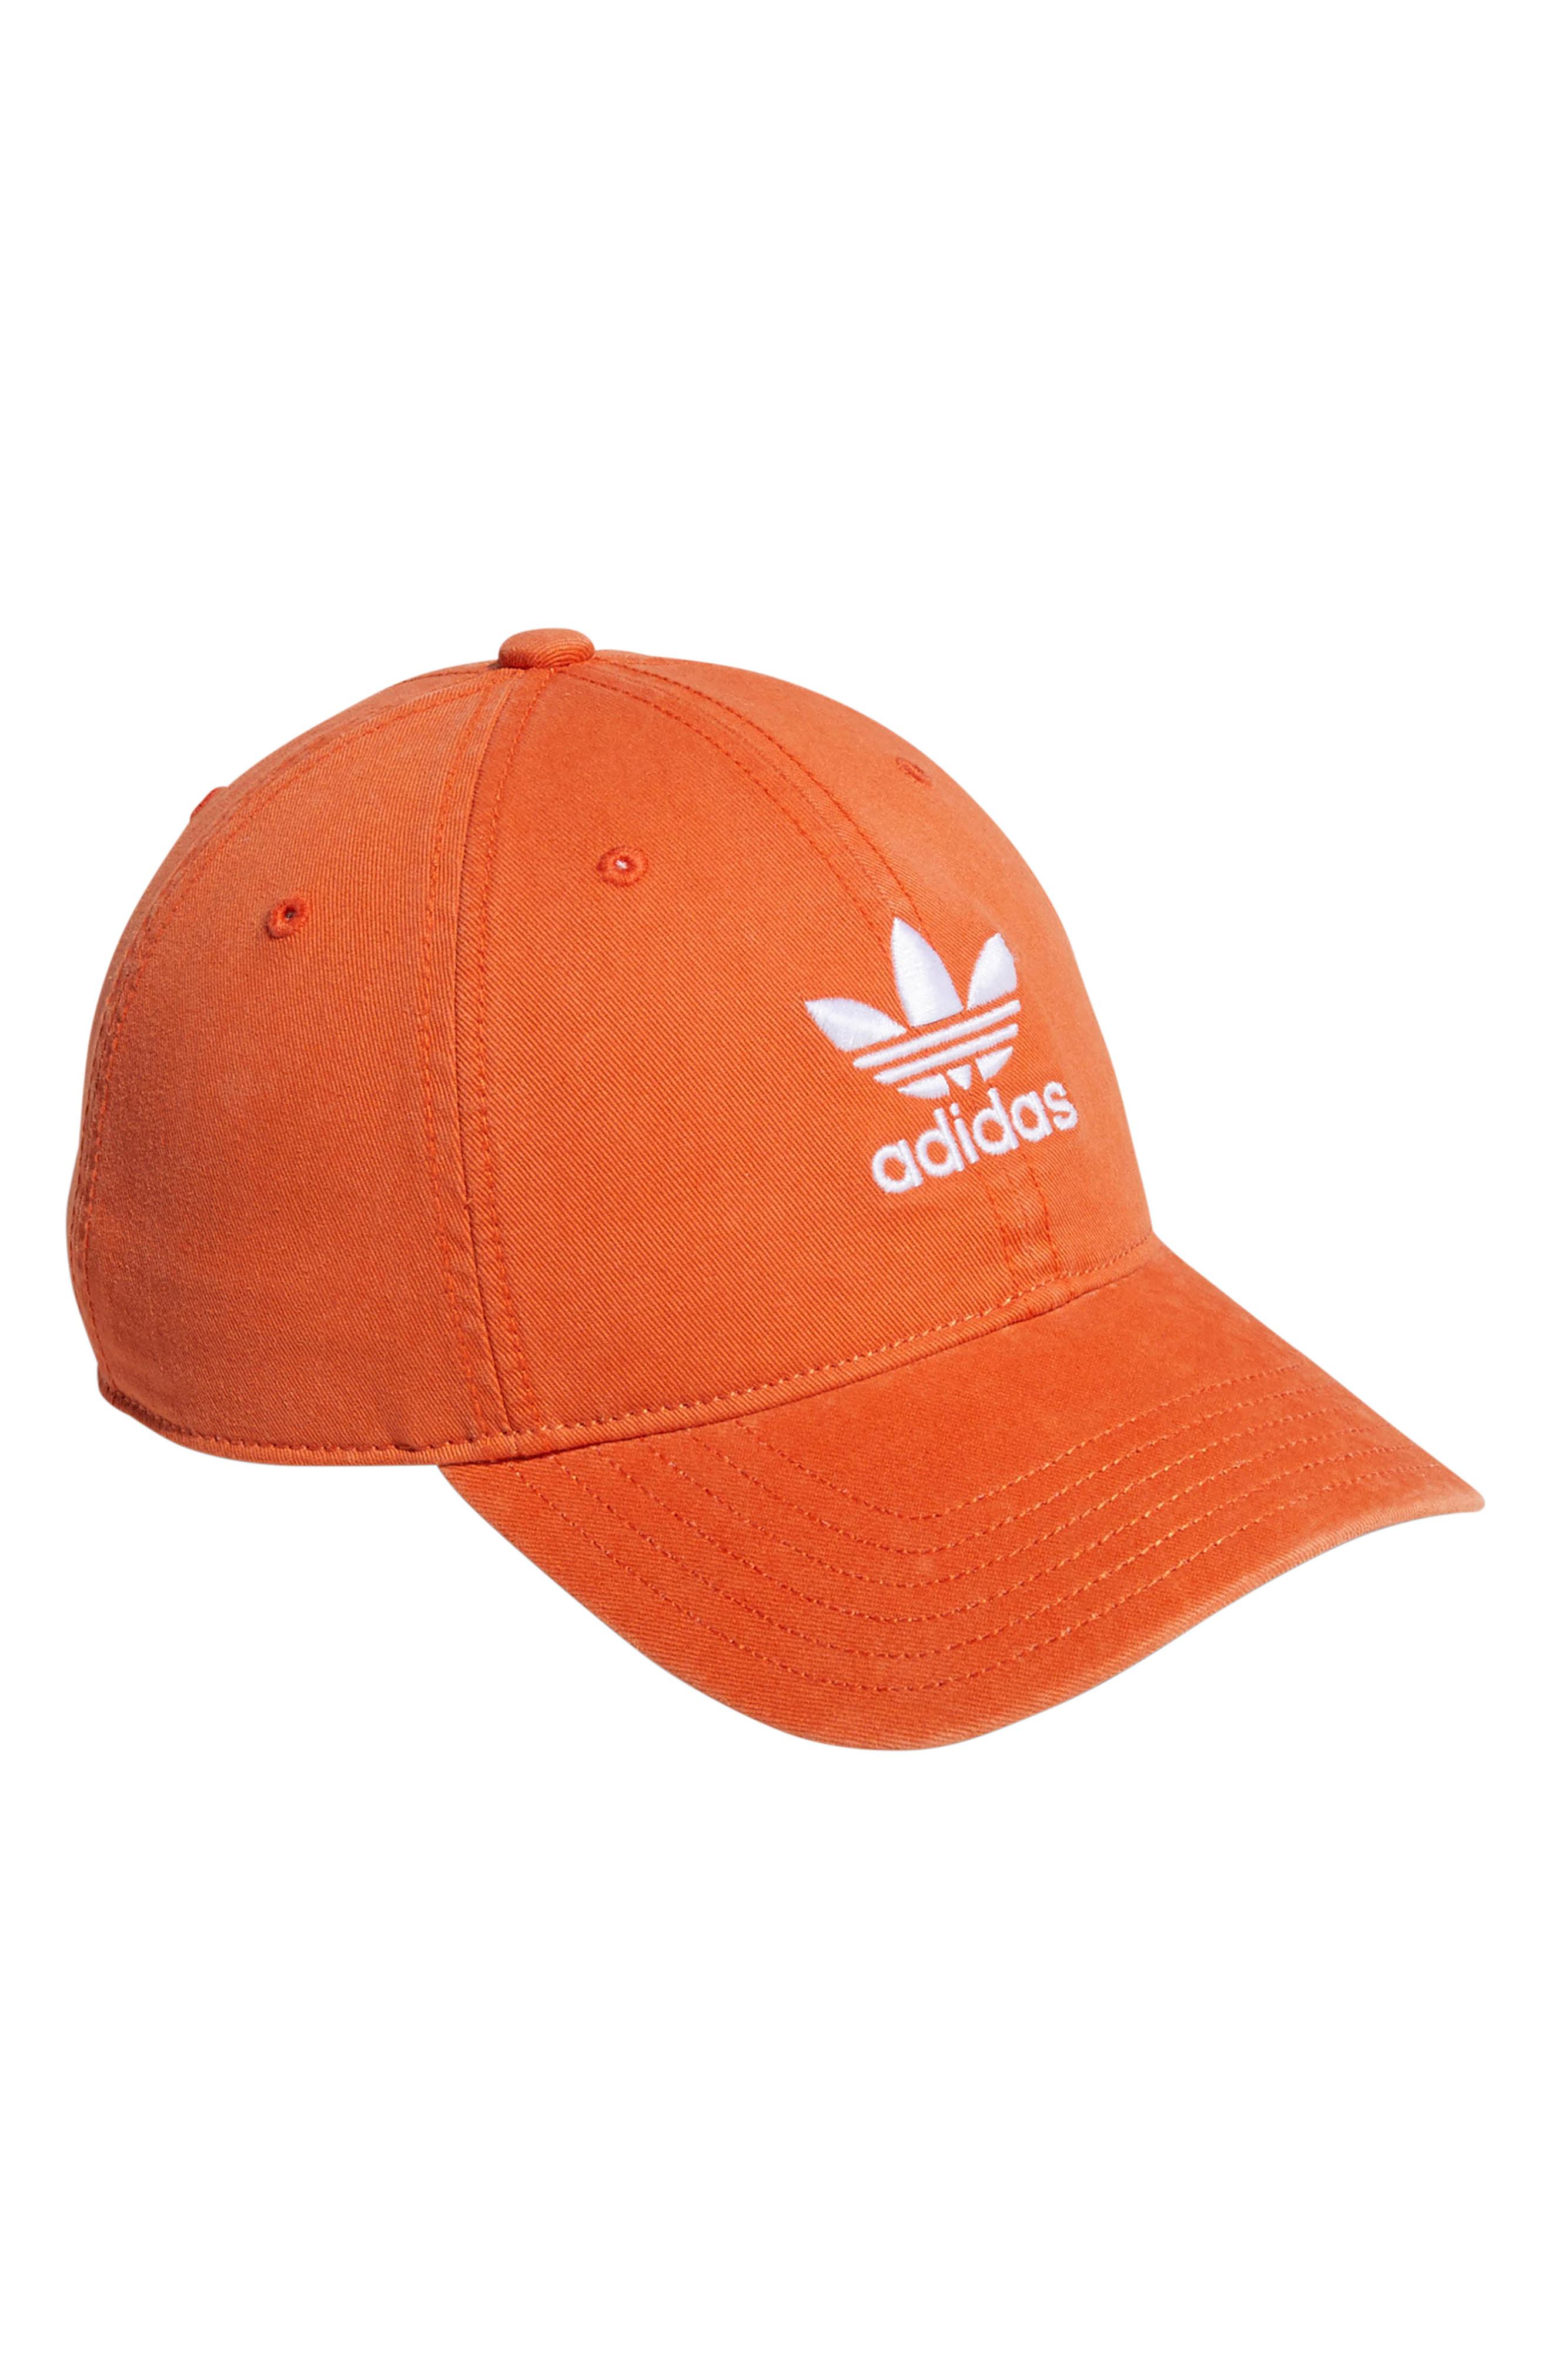 adidas Originals Relaxed Cotton Baseball Cap in Orange for Men - Lyst